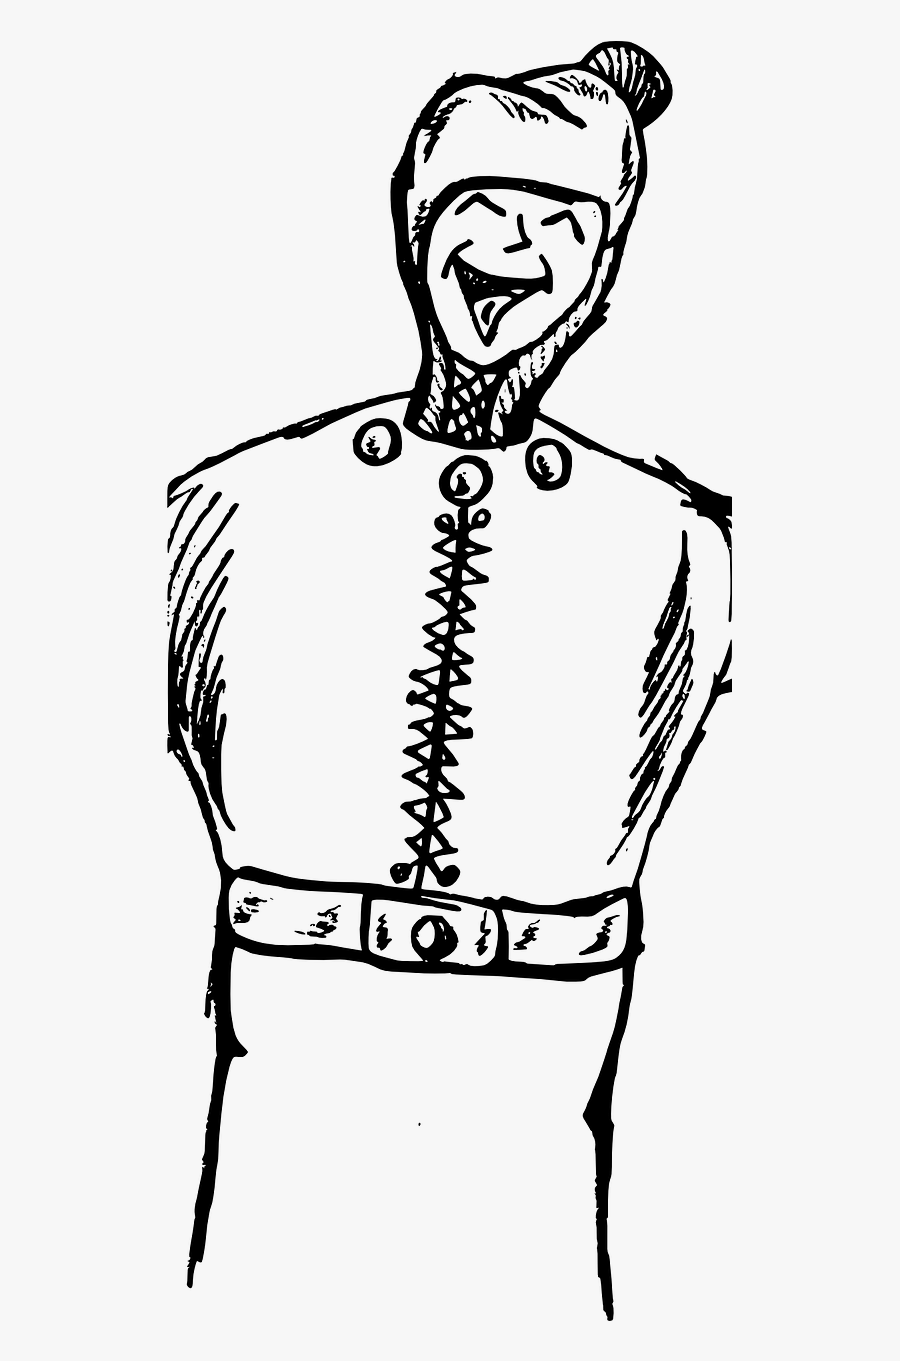 Laughing Man - Hombre Riendo Png, Transparent Clipart